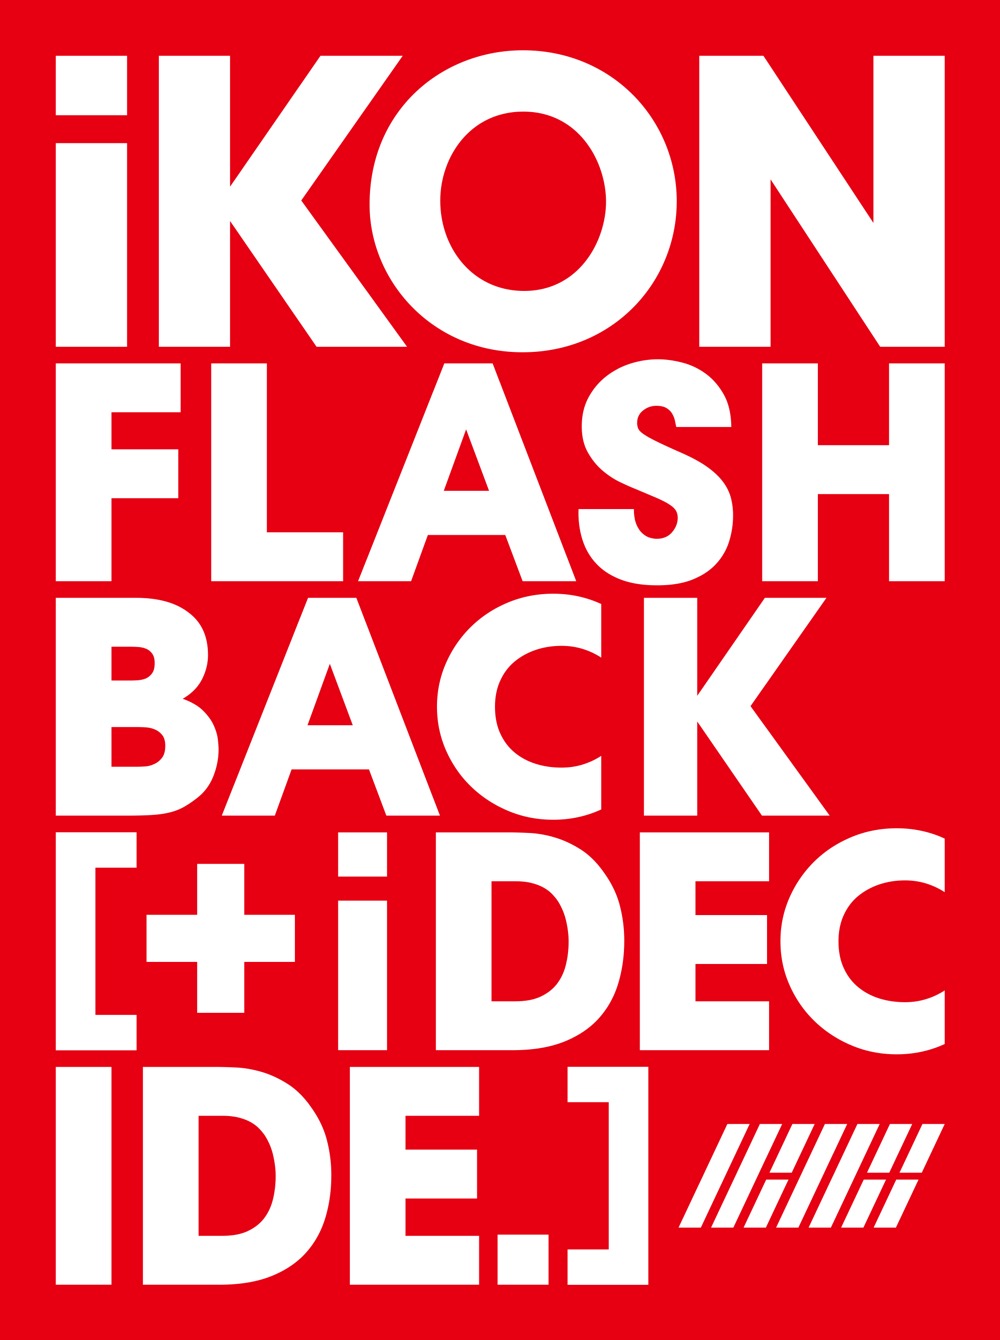 iKON、約2年半ぶりとなるジャパンツアーの模様がdTVで独占生配信決定 - 画像一覧（2/4）